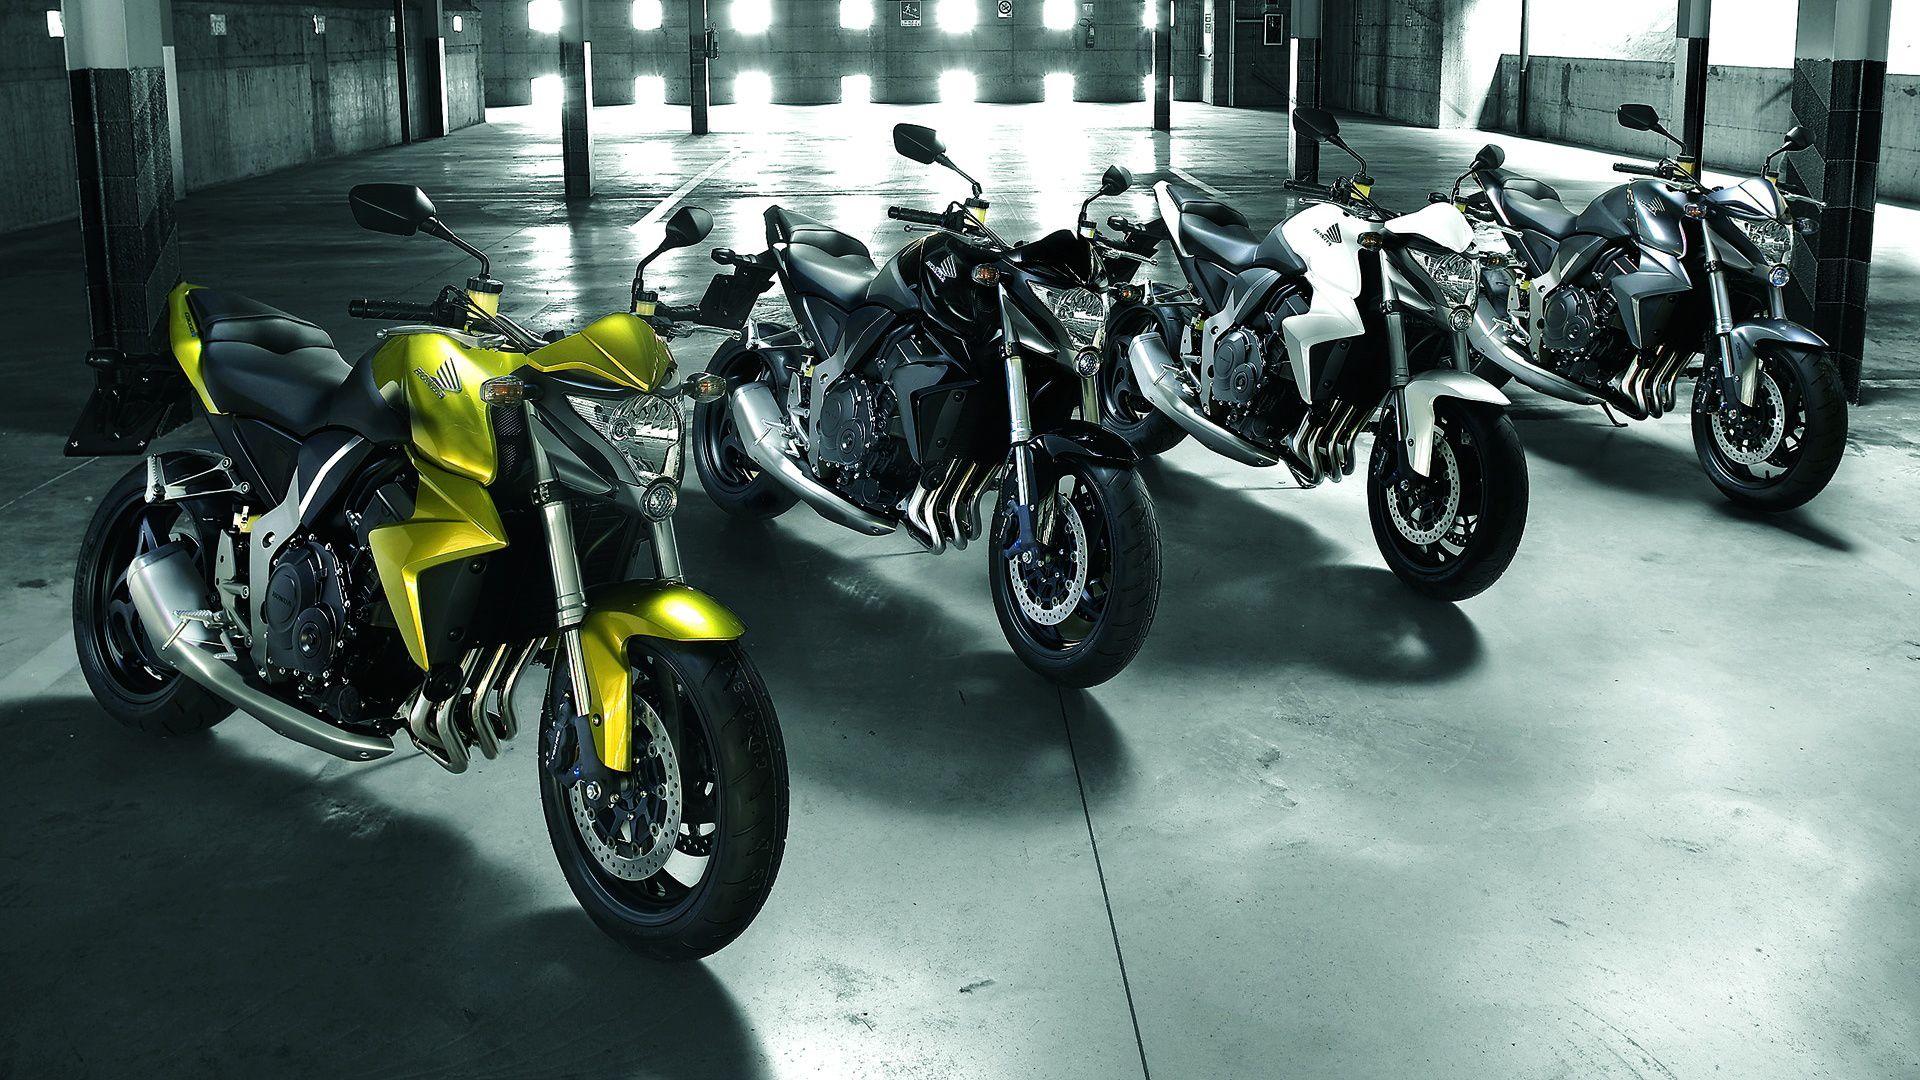 Honda Motorcycle Wallpapers Top Free Honda Motorcycle